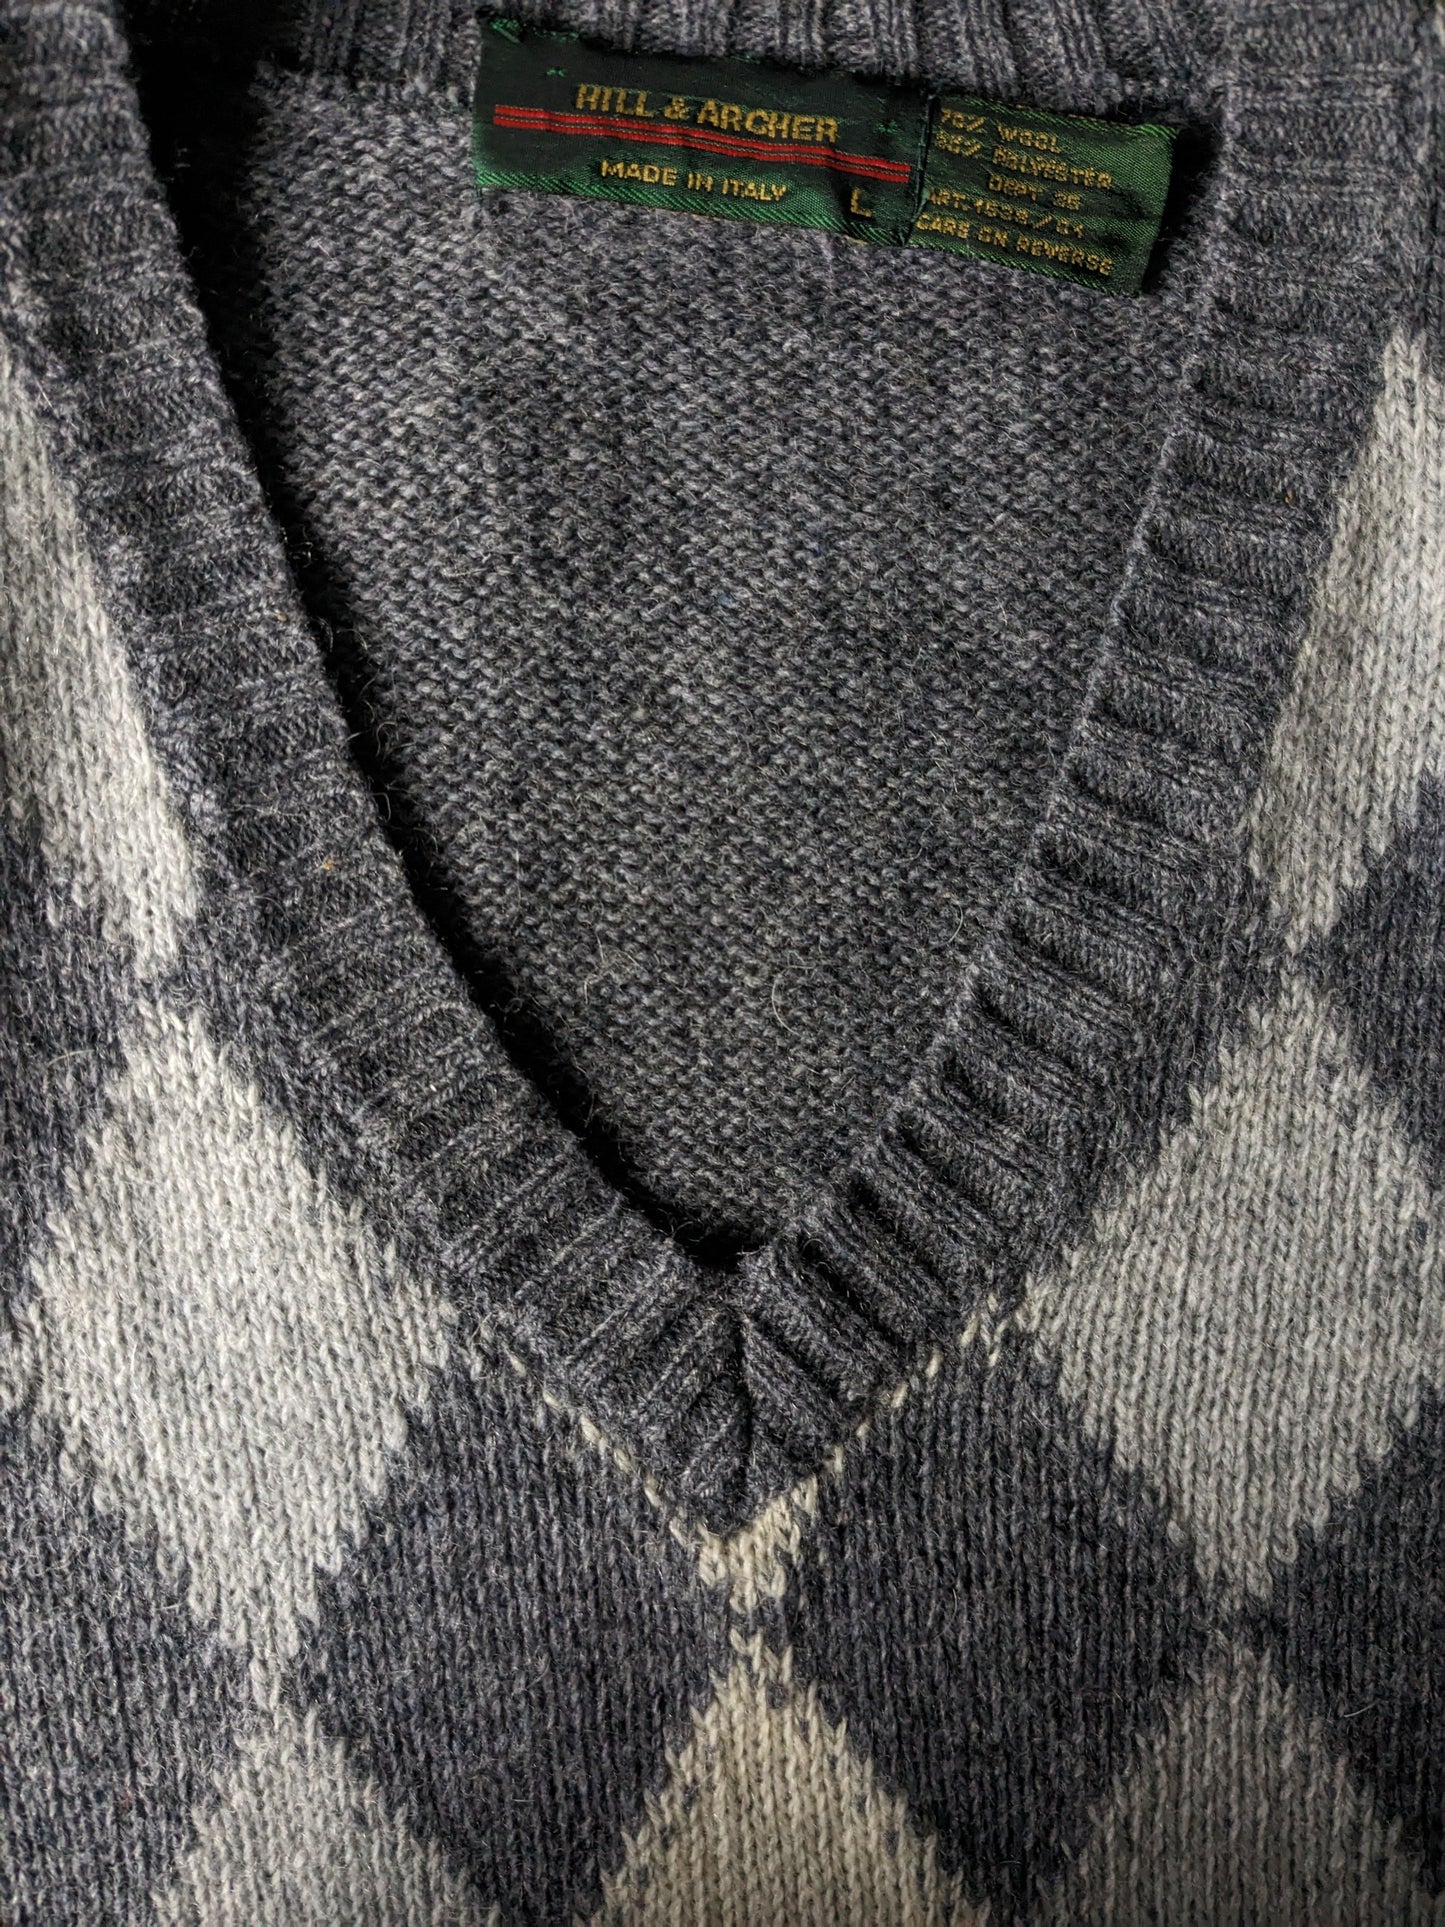 Vintage Hill & Archer Wools Spencer. Motifa Gray Beige Argyle. Tamaño L. 70% de lana.